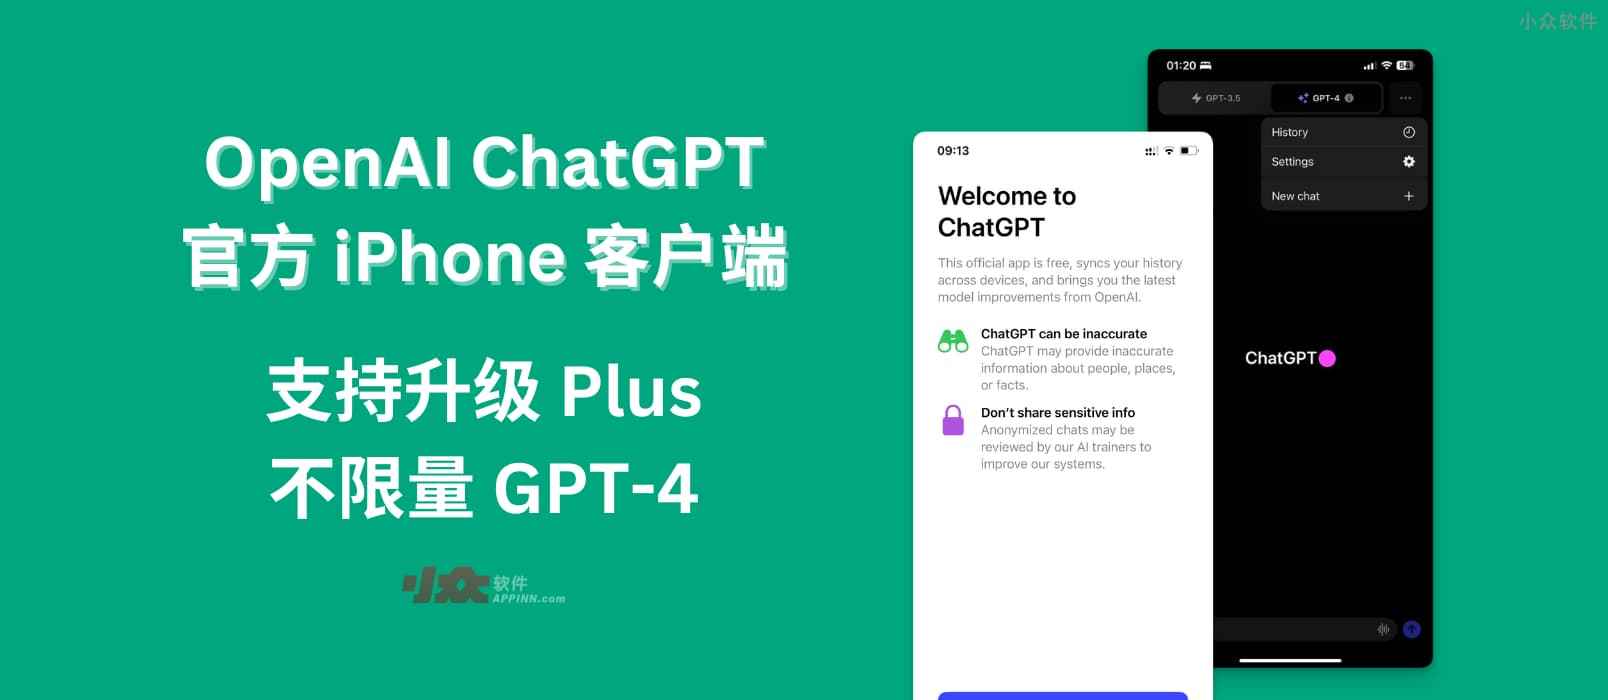 OpenAI ChatGPT 官方 iPhone 客户端发布，支持升级 Plus，不限量 GPT-4 1